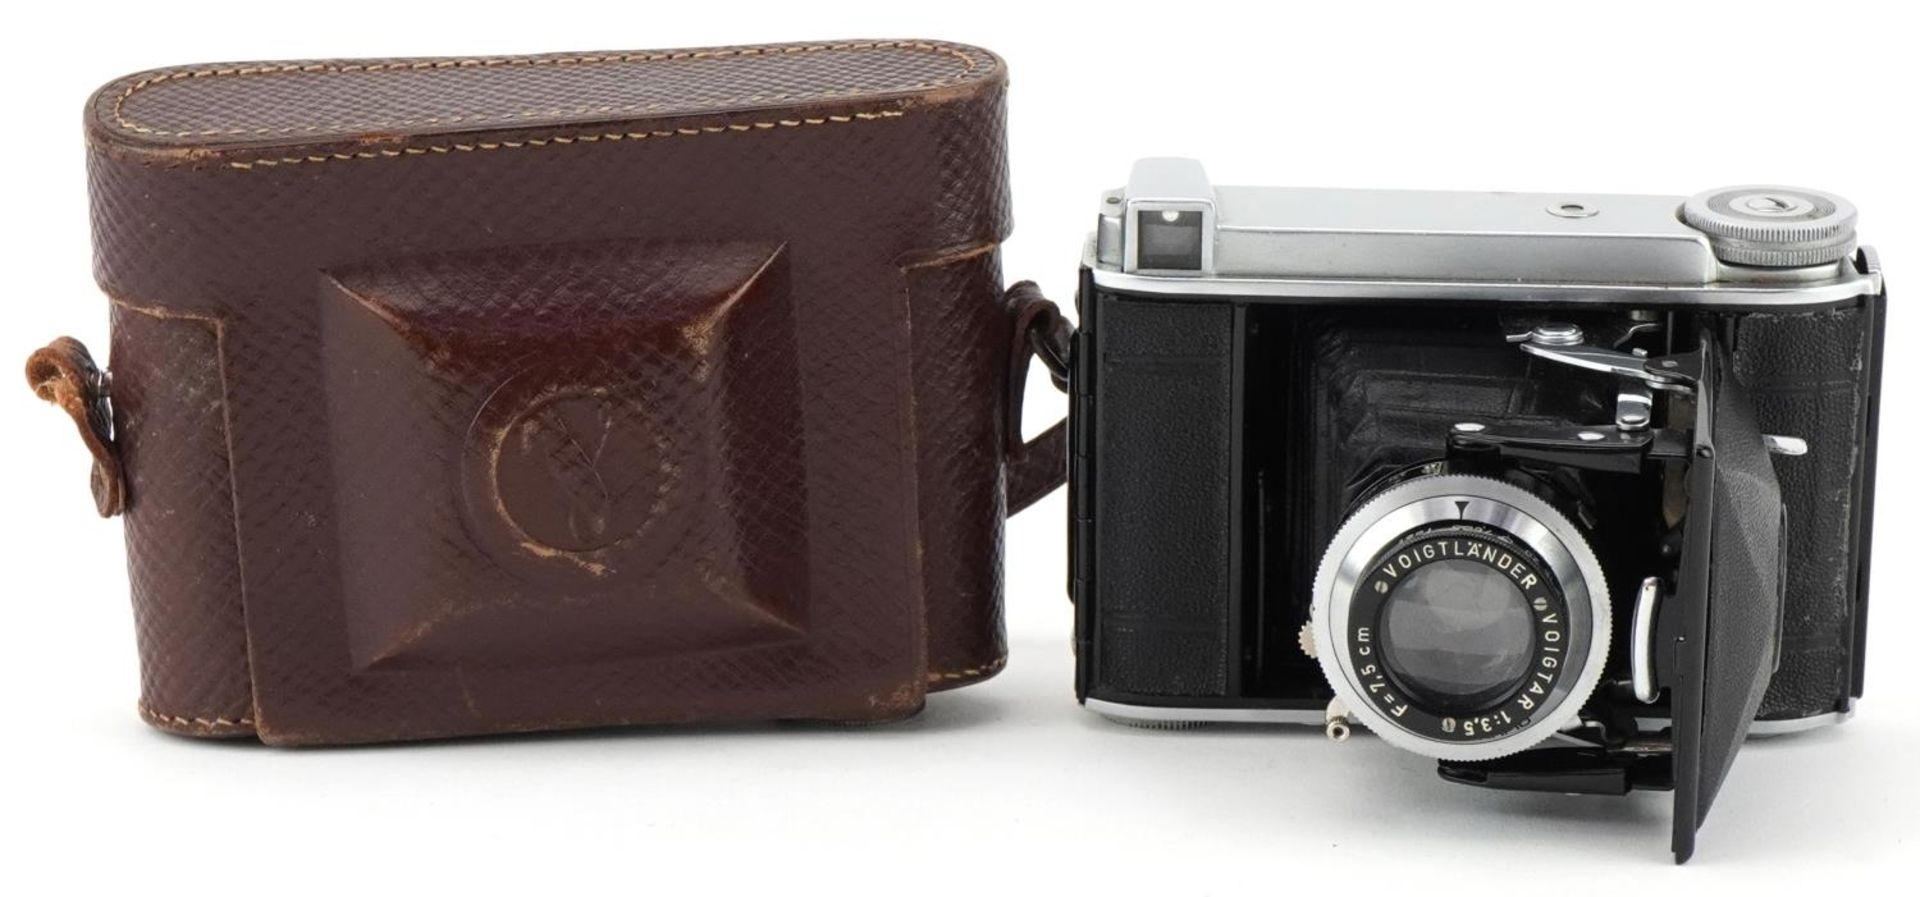 Vintage Voigtlander Voigtar camera with brown leather case